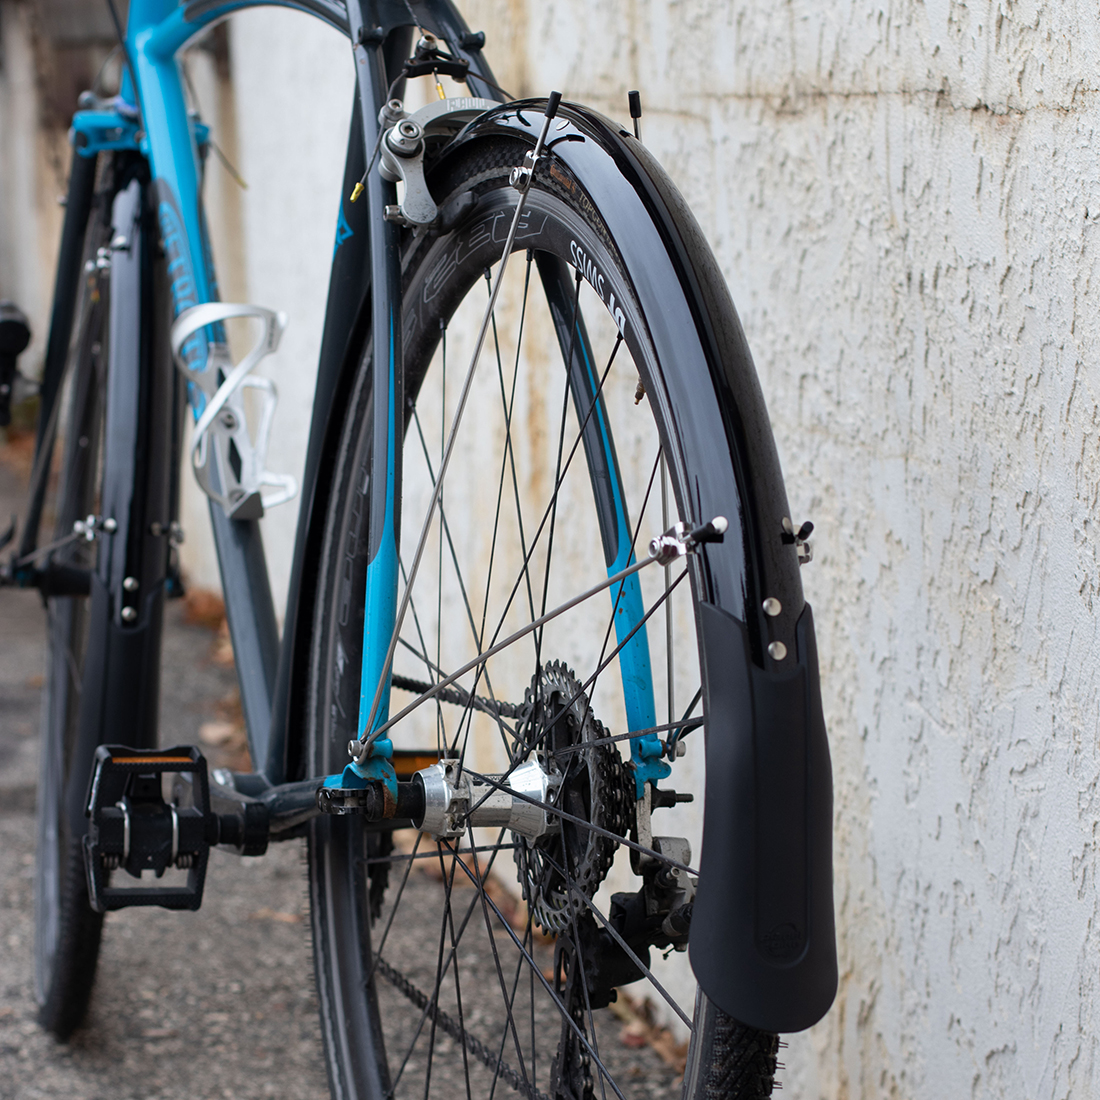 Planet Bike - High Quality Bike Accessories & Cycling Gear